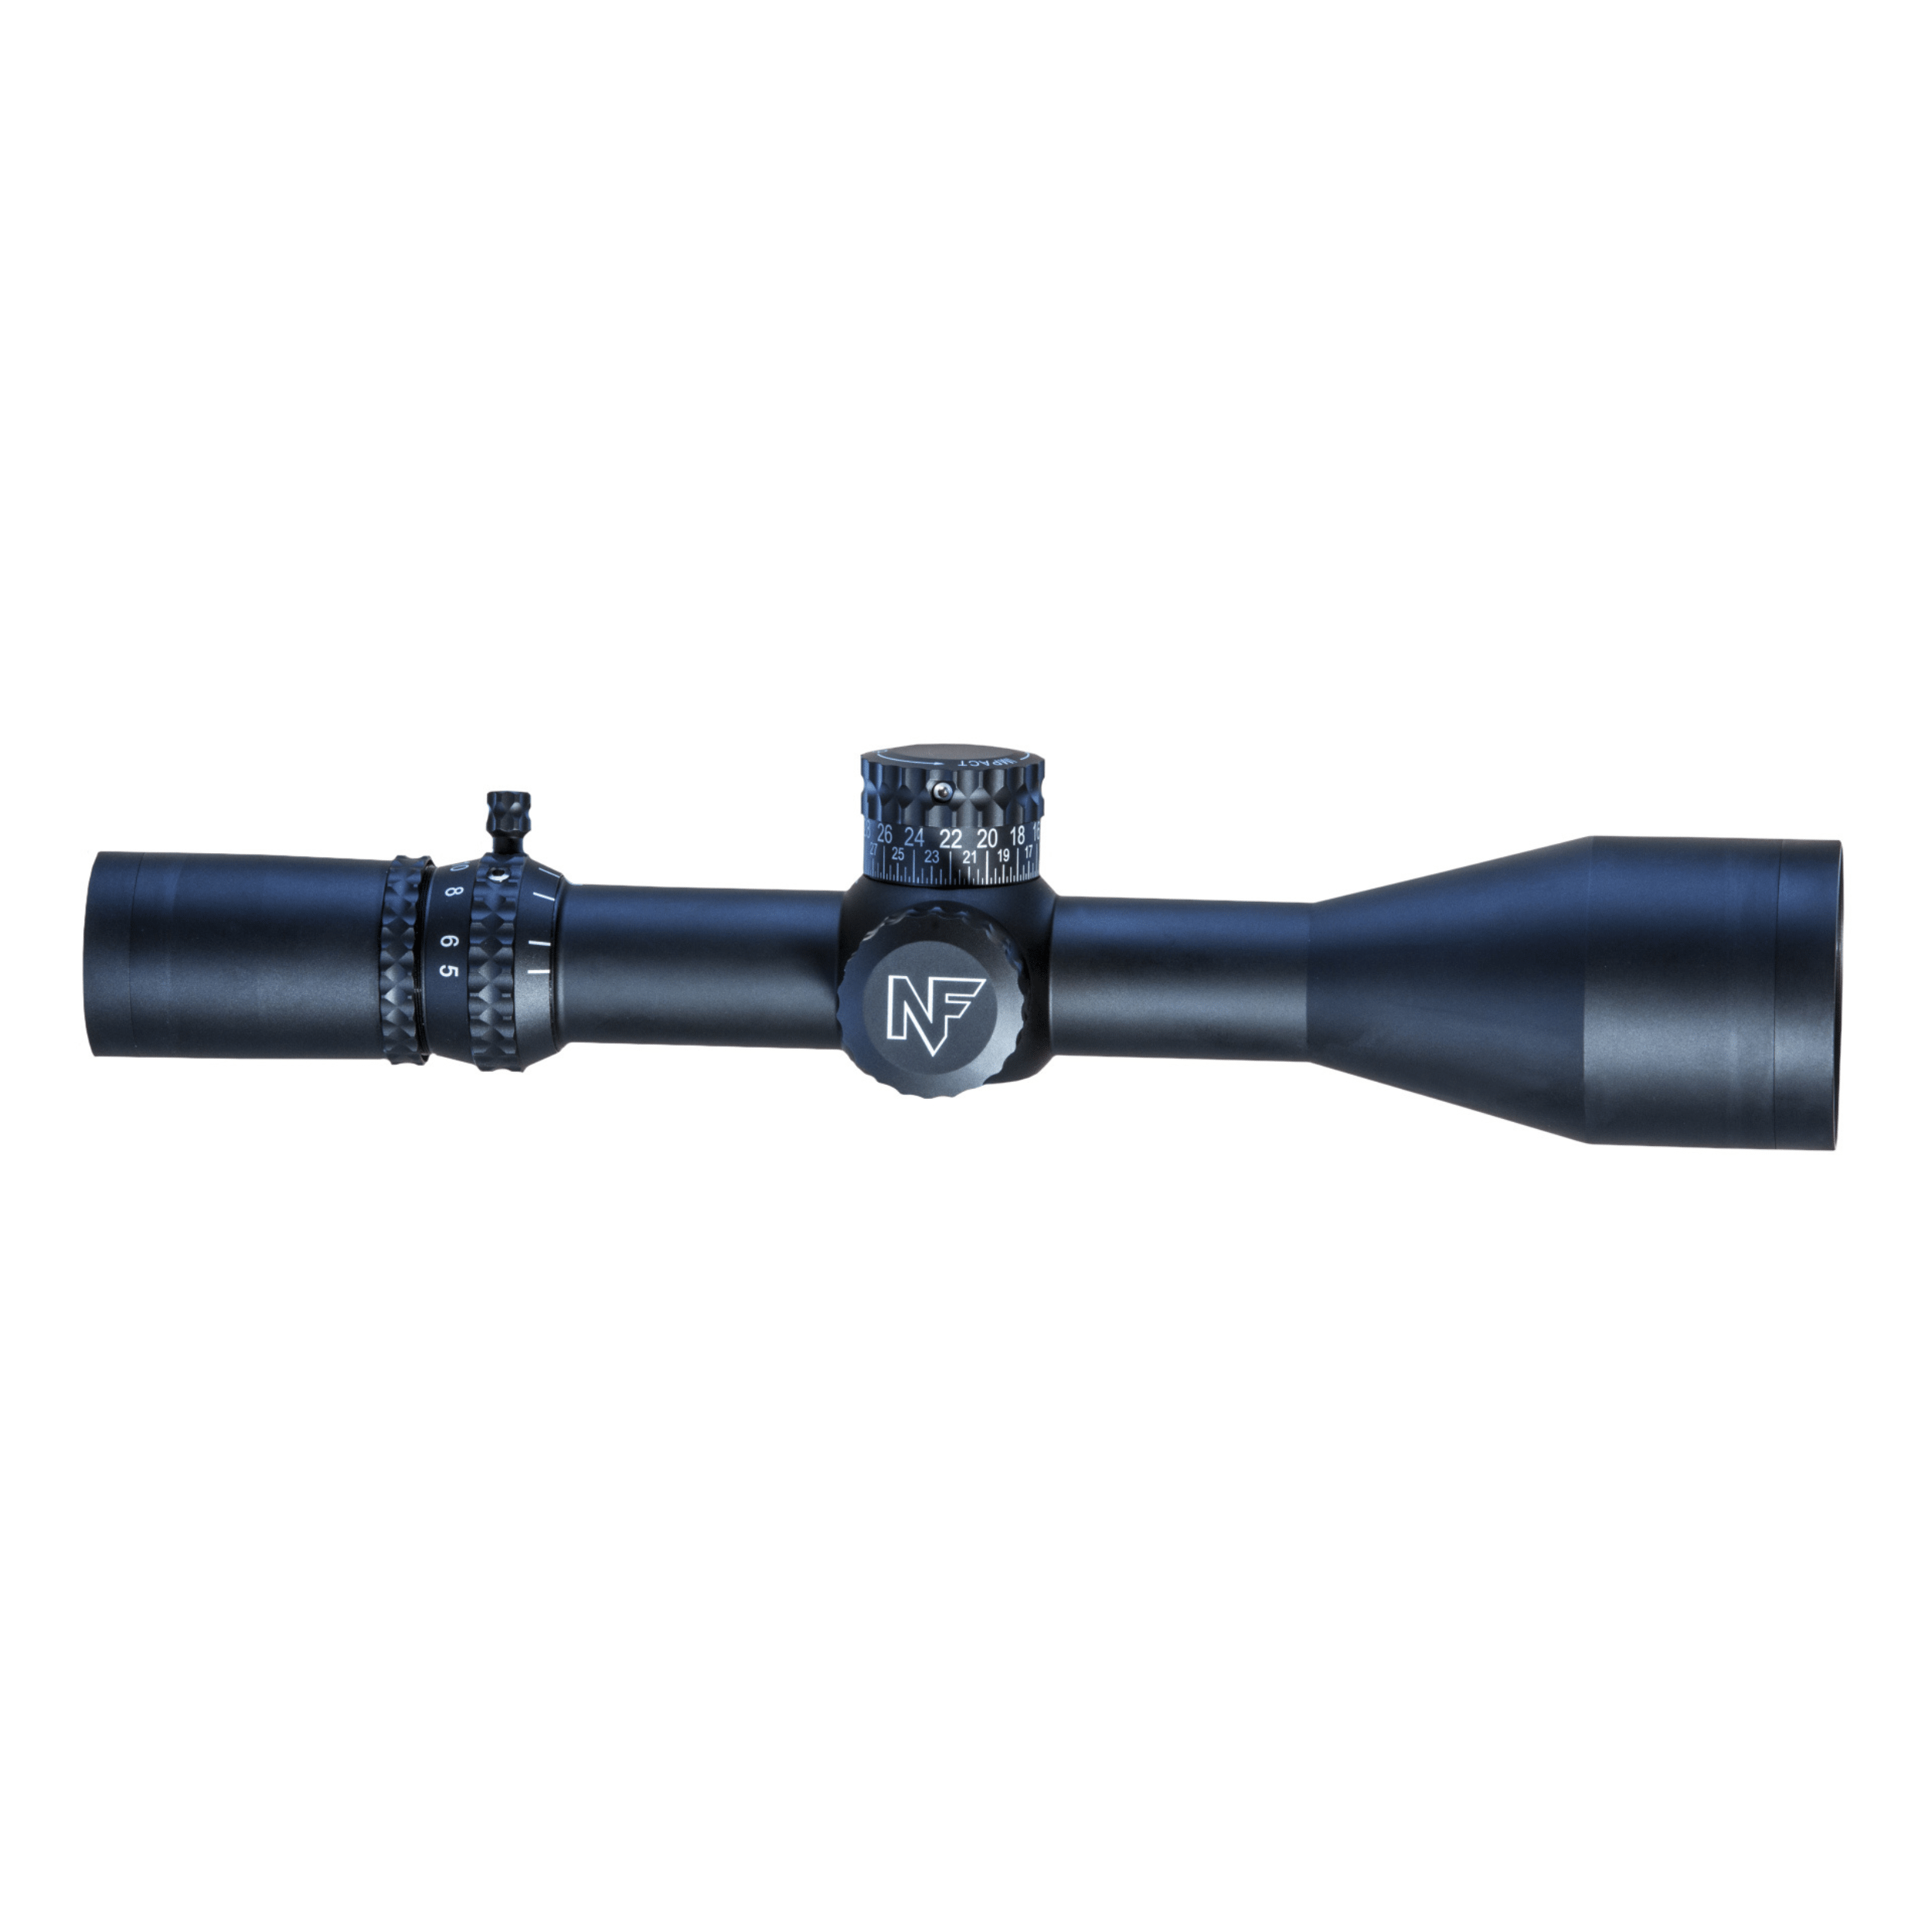 ATACR – 5-25x56mm F2